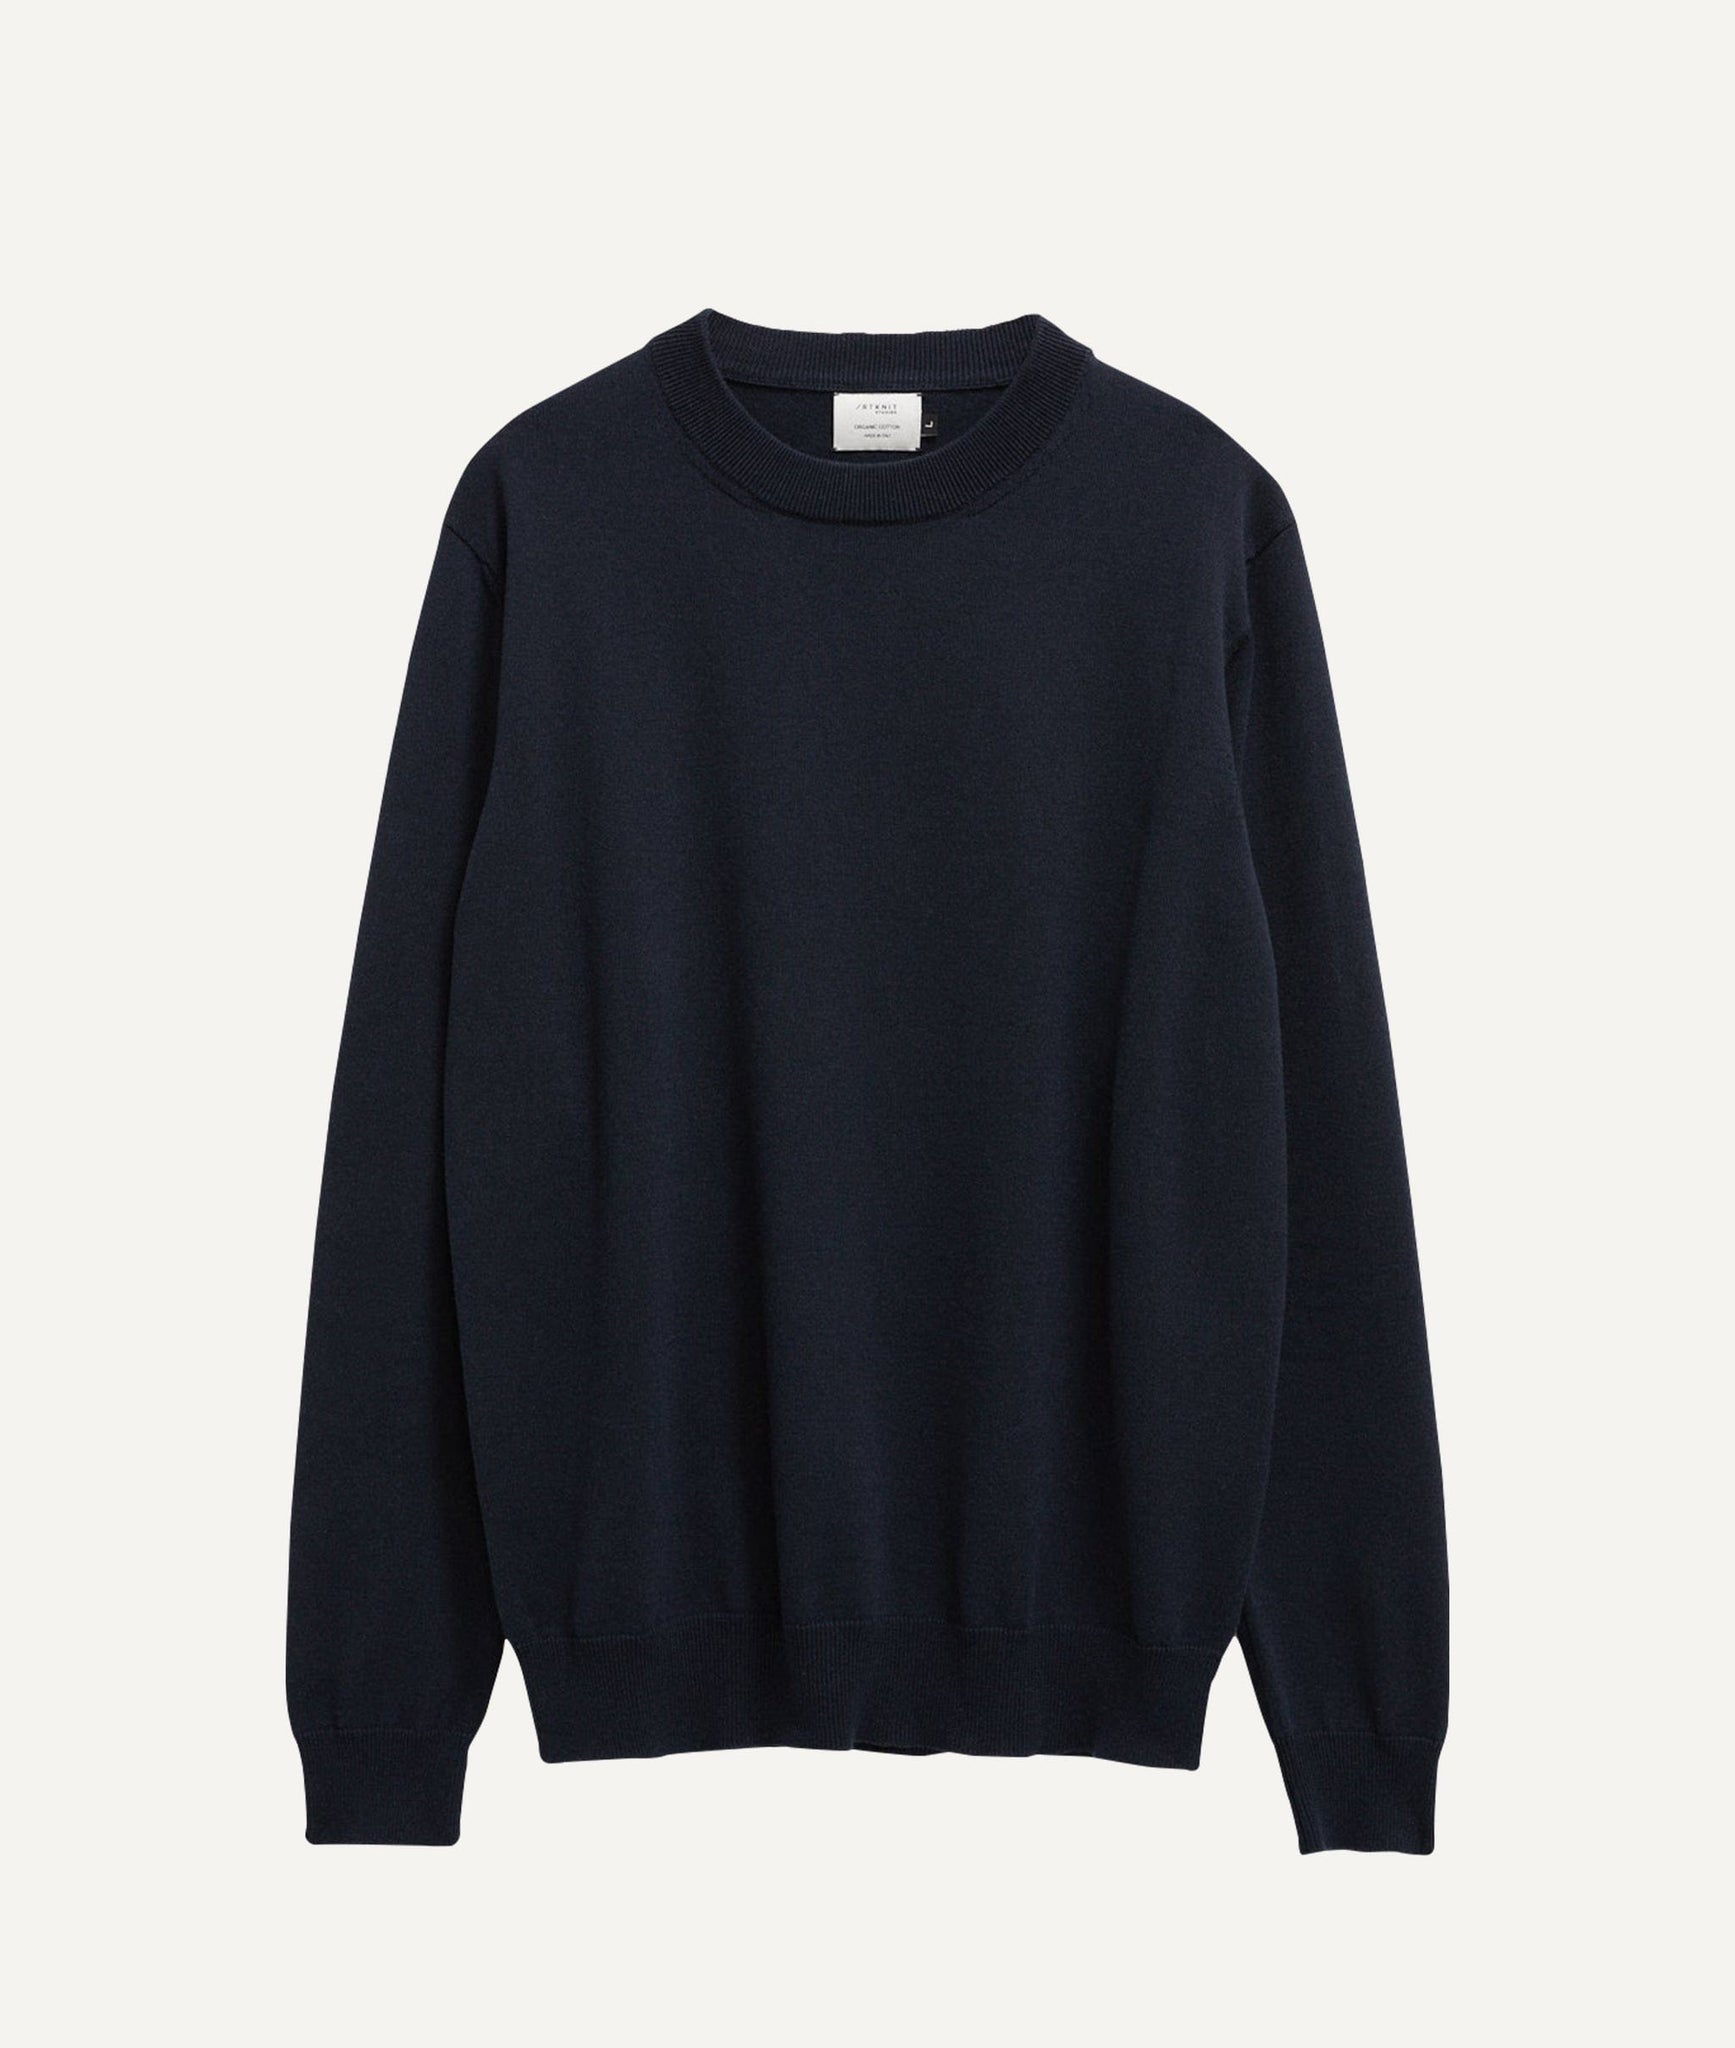 The Organic Cotton Lightweight Sweater